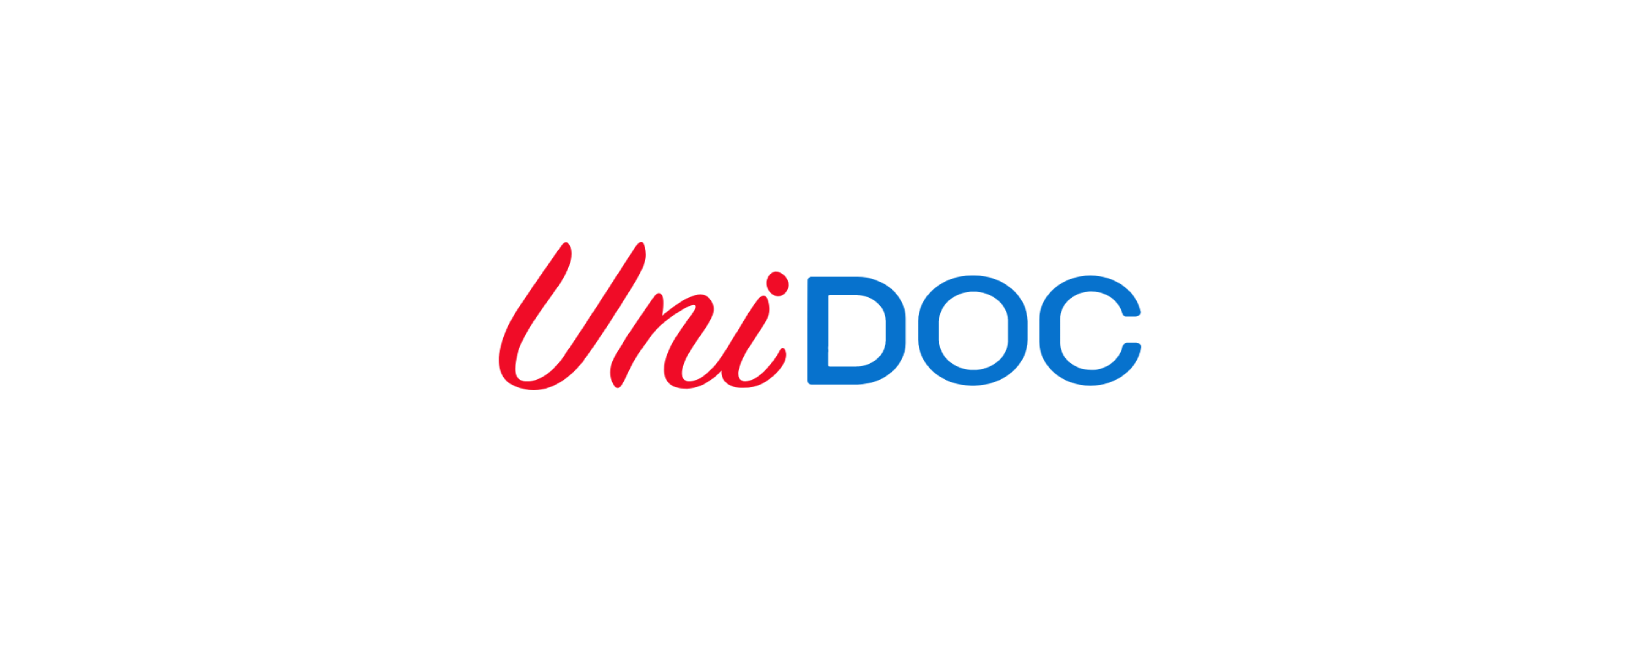 UniDoc Discount Code 2022